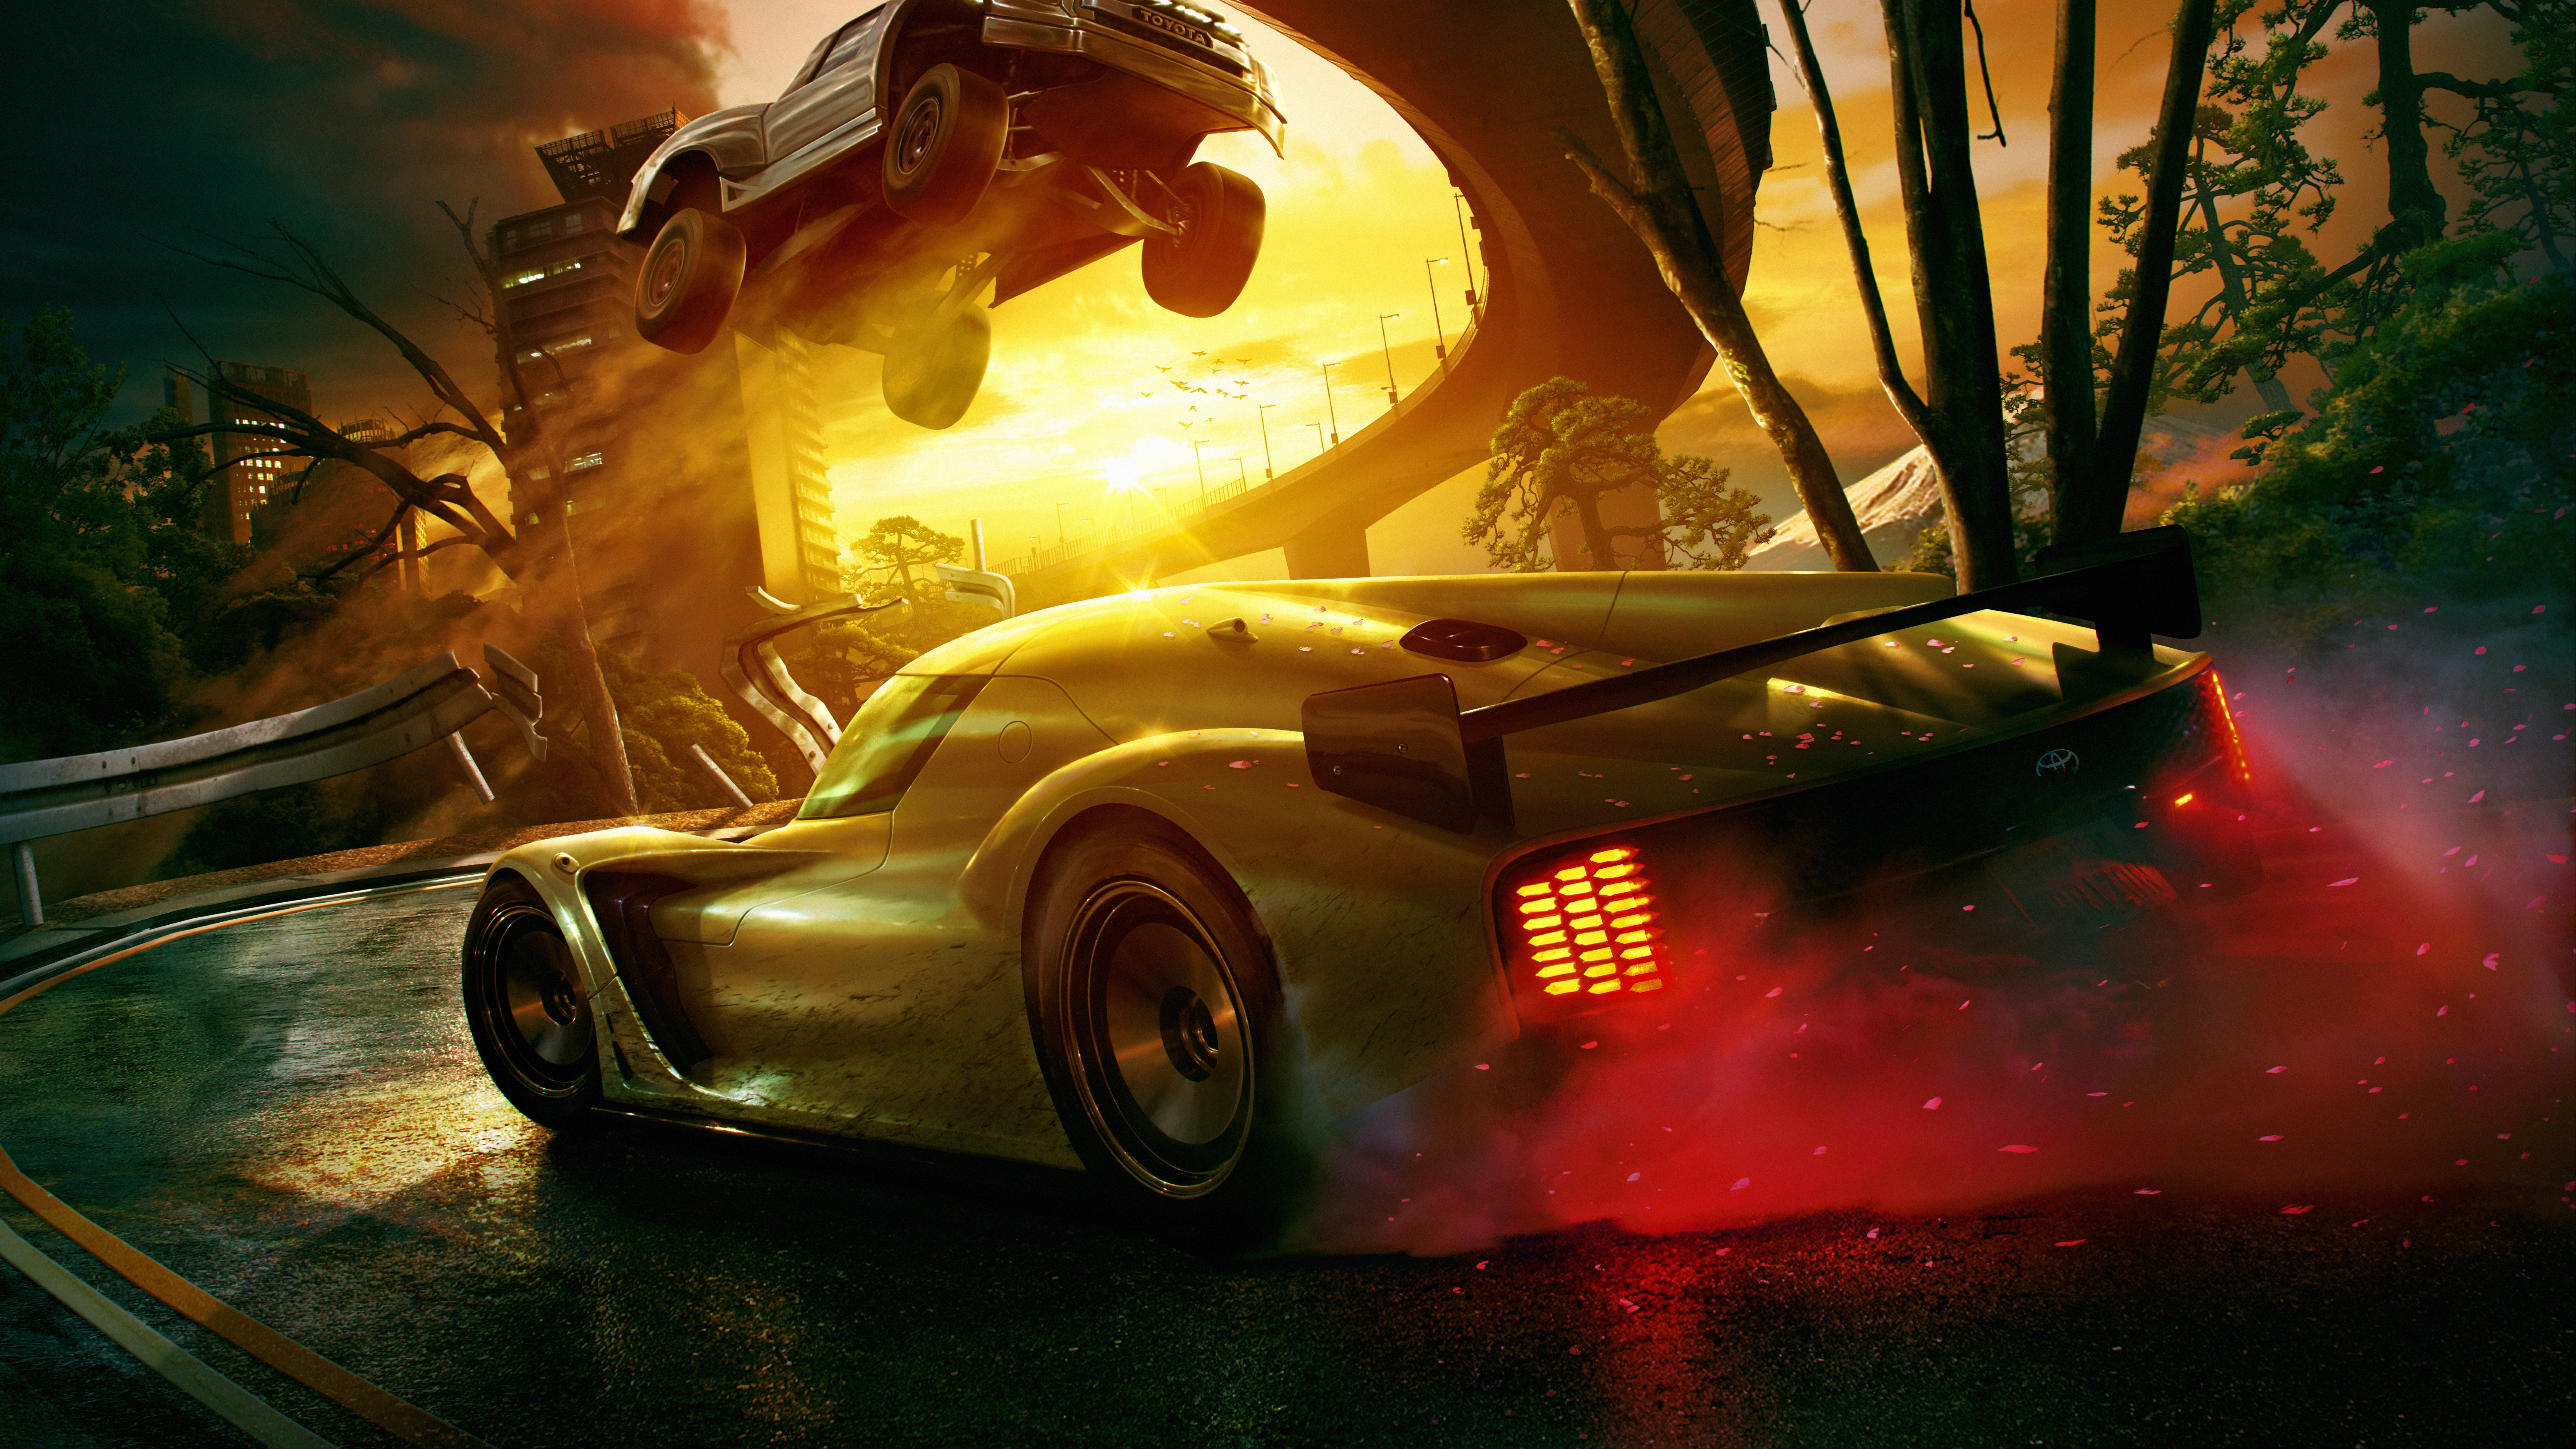 Forza Horizon 5 Wallpaper 4K, 2021 Games, Racing games, PC Games, Games